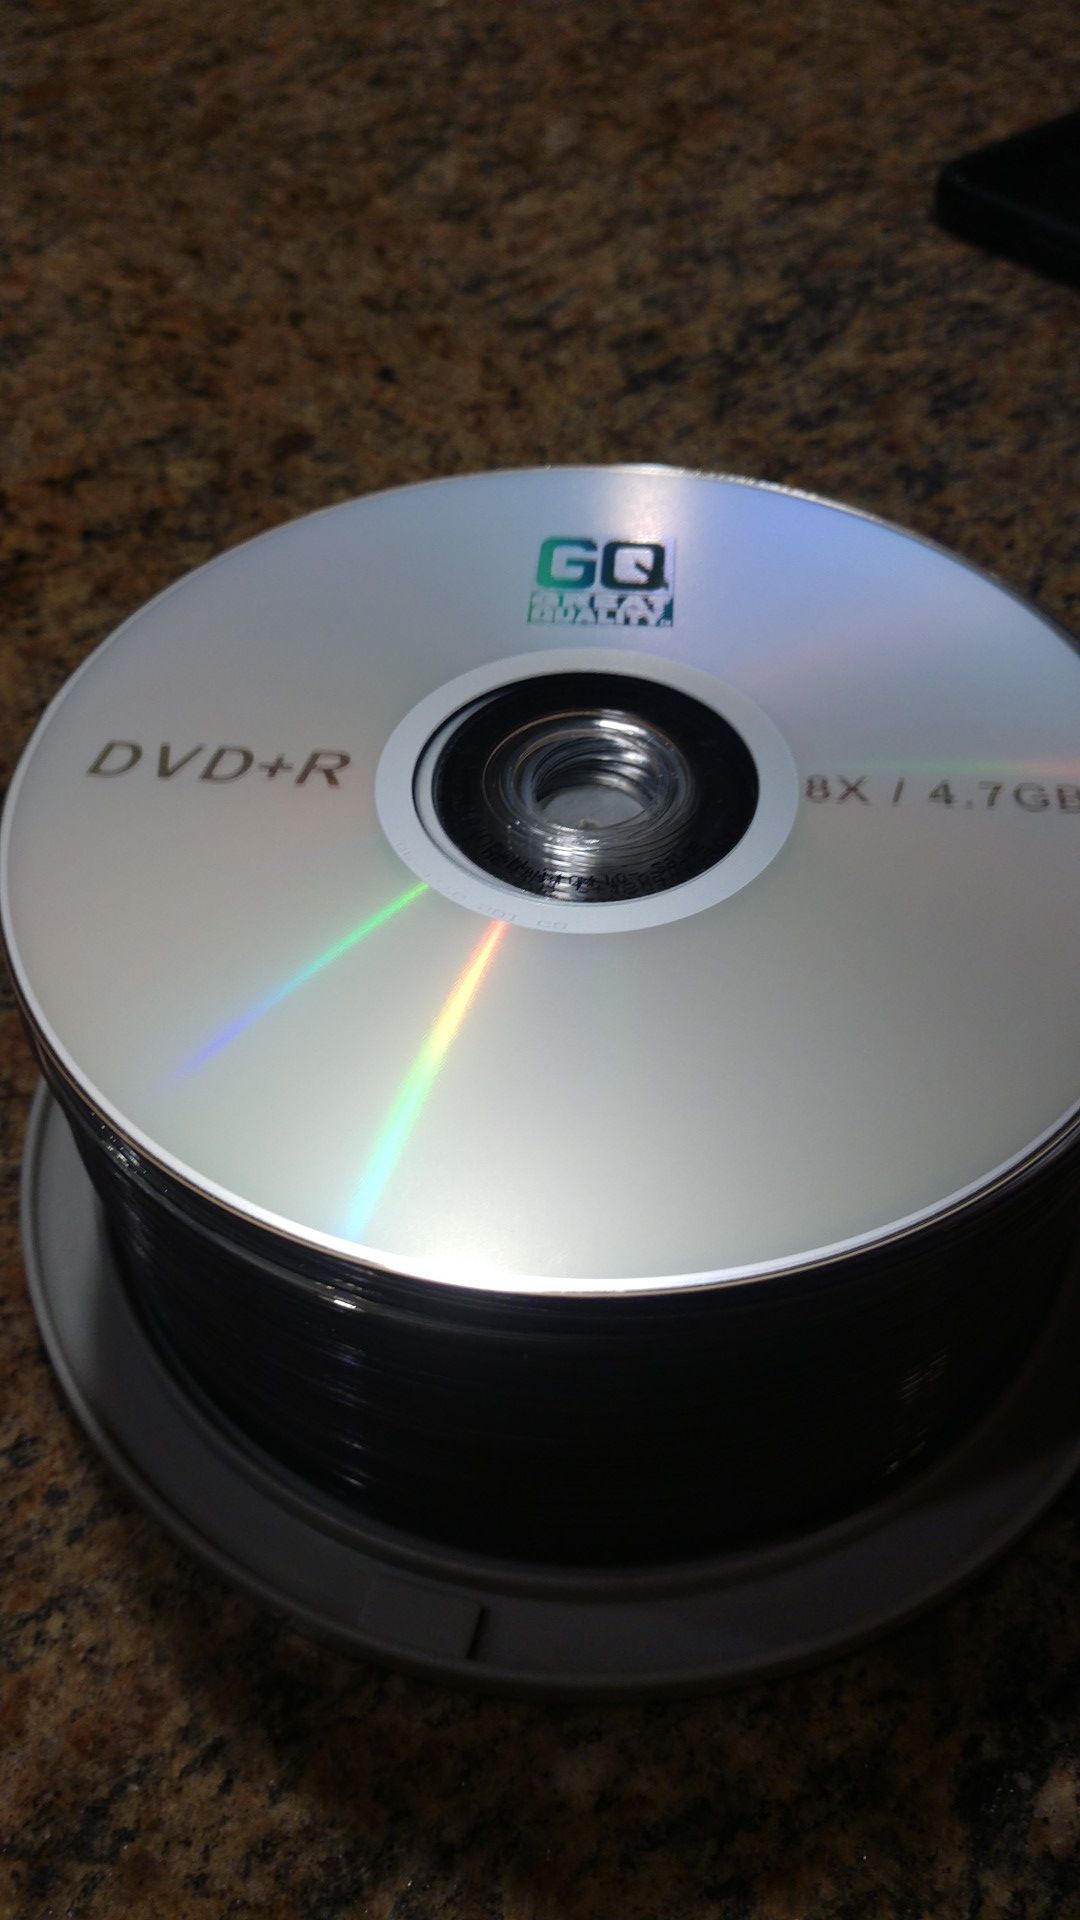 DVD+R (40 discs) 8x/4.7 gb